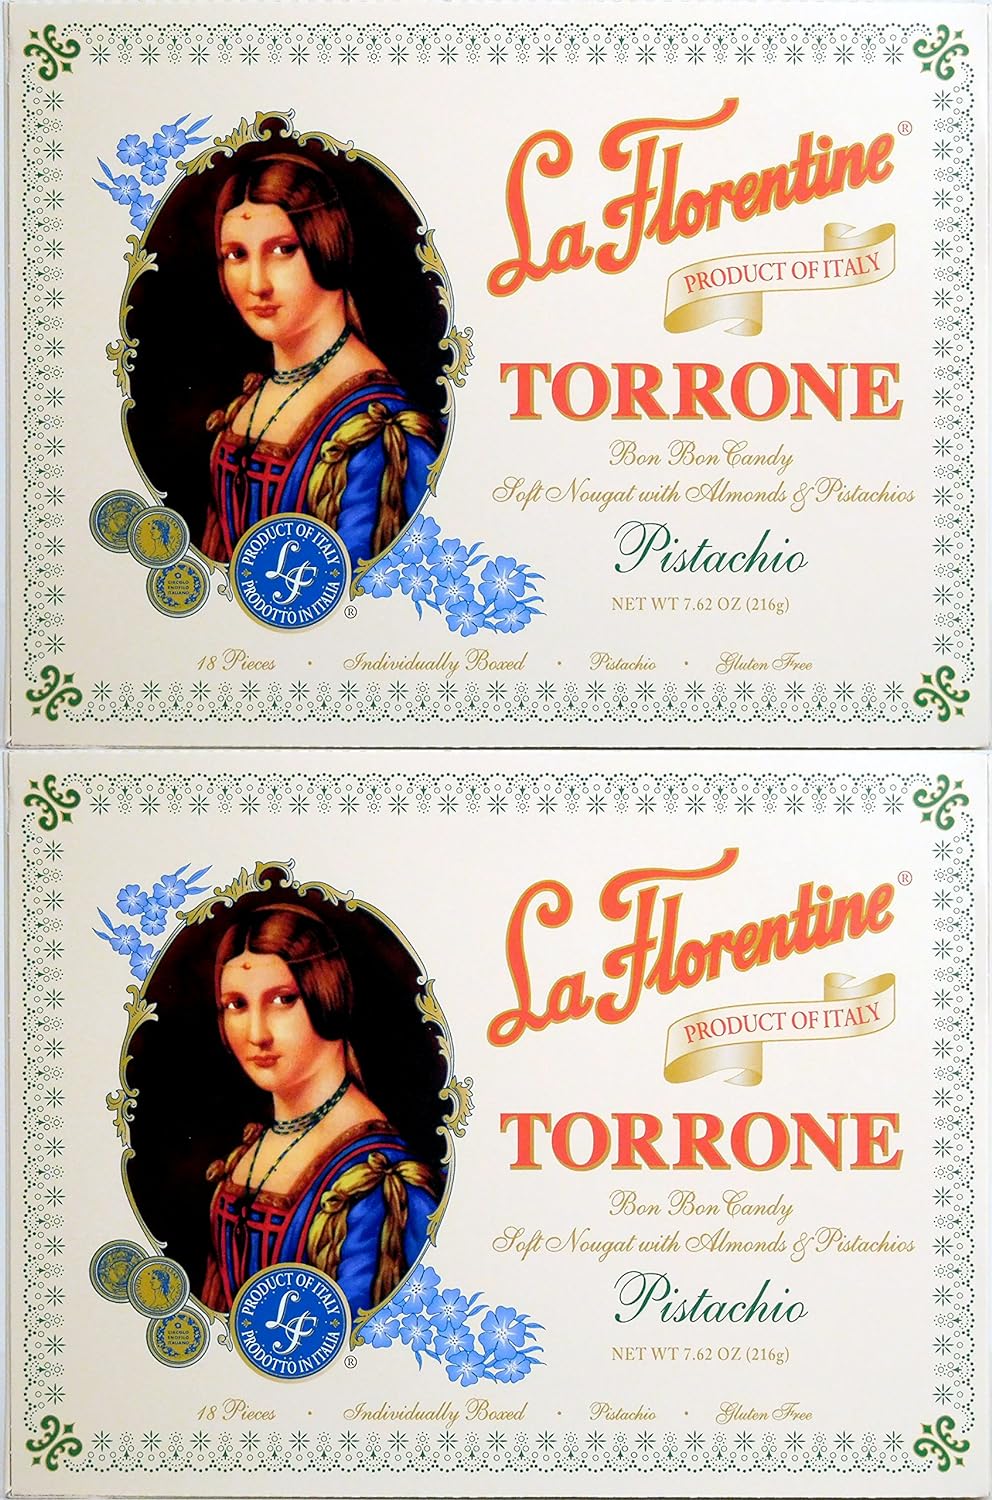 La Florentine Soft Torrone with Almonds & Pistachios - 2 Boxes